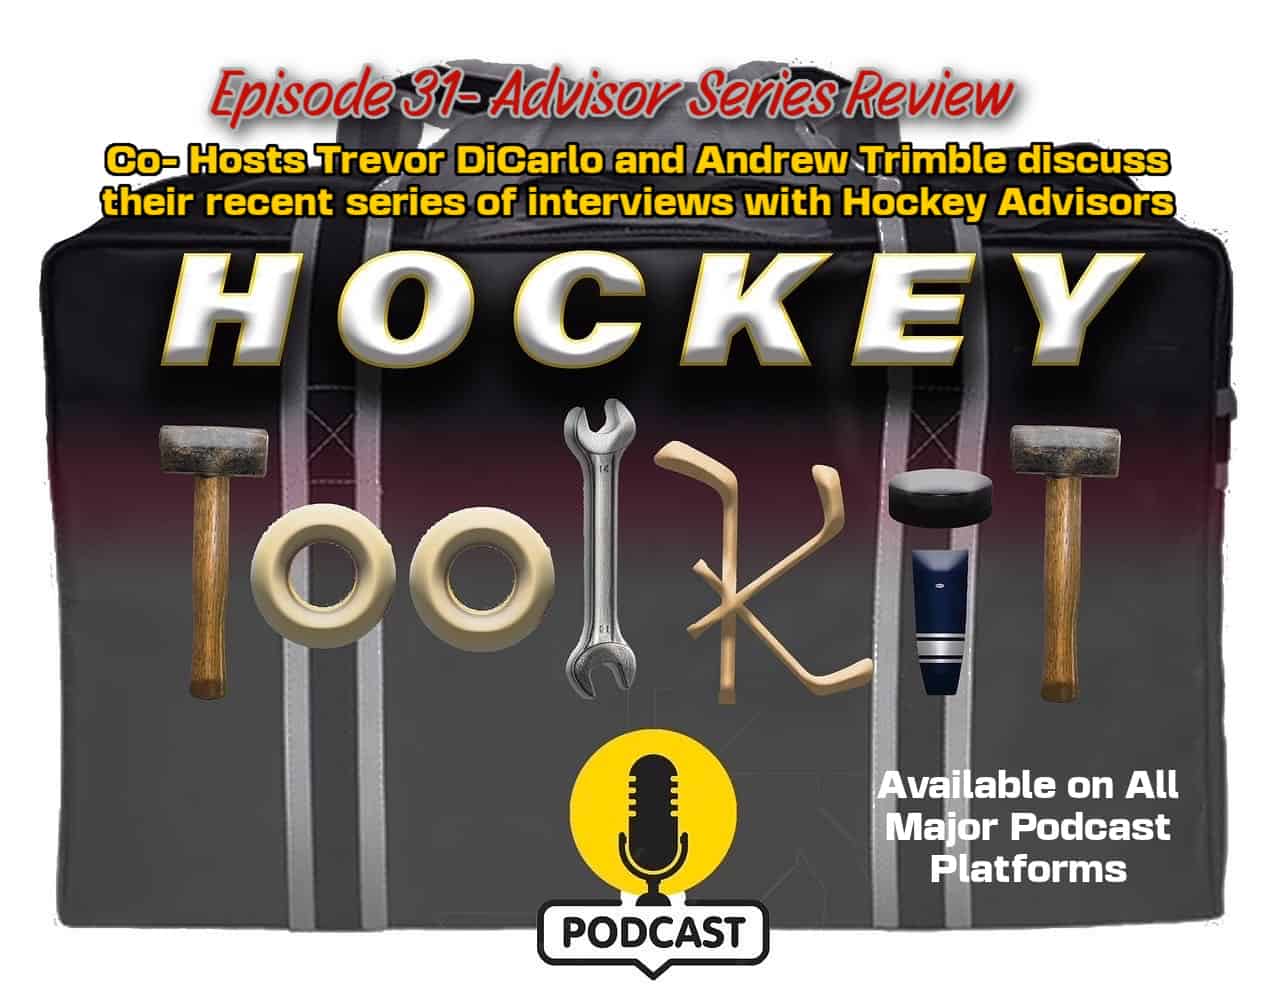 Watch - The Hockey Focus